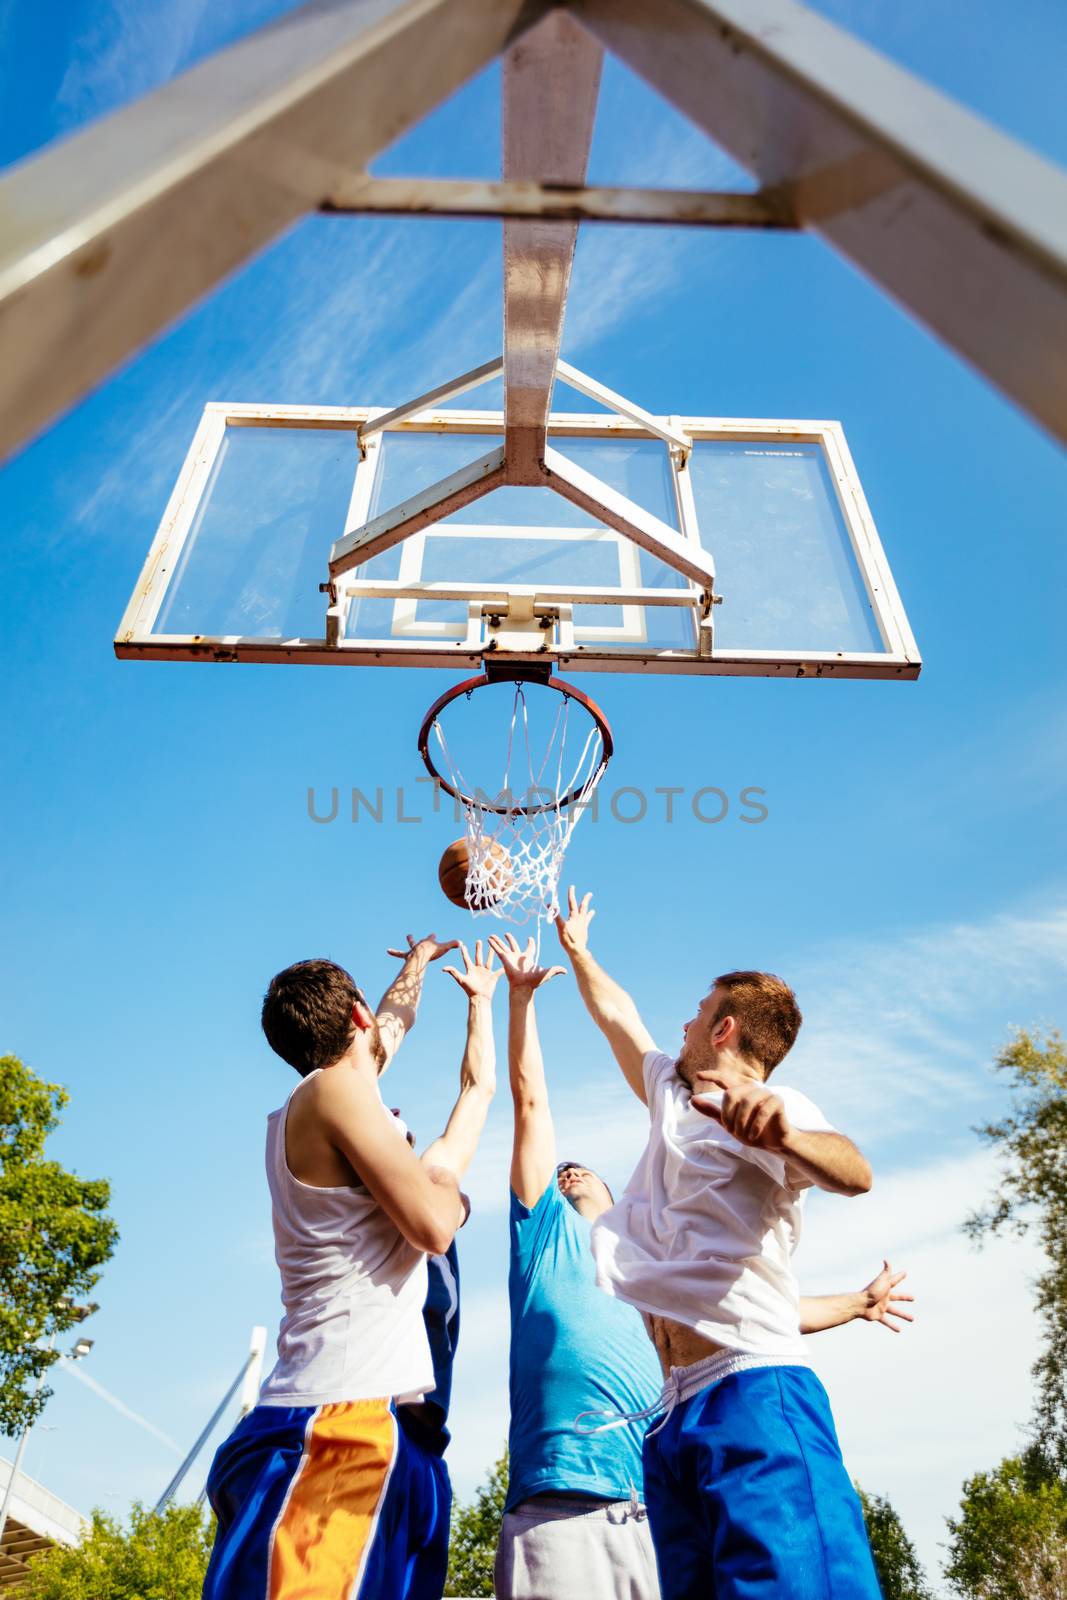 Good Basketball Game by MilanMarkovic78